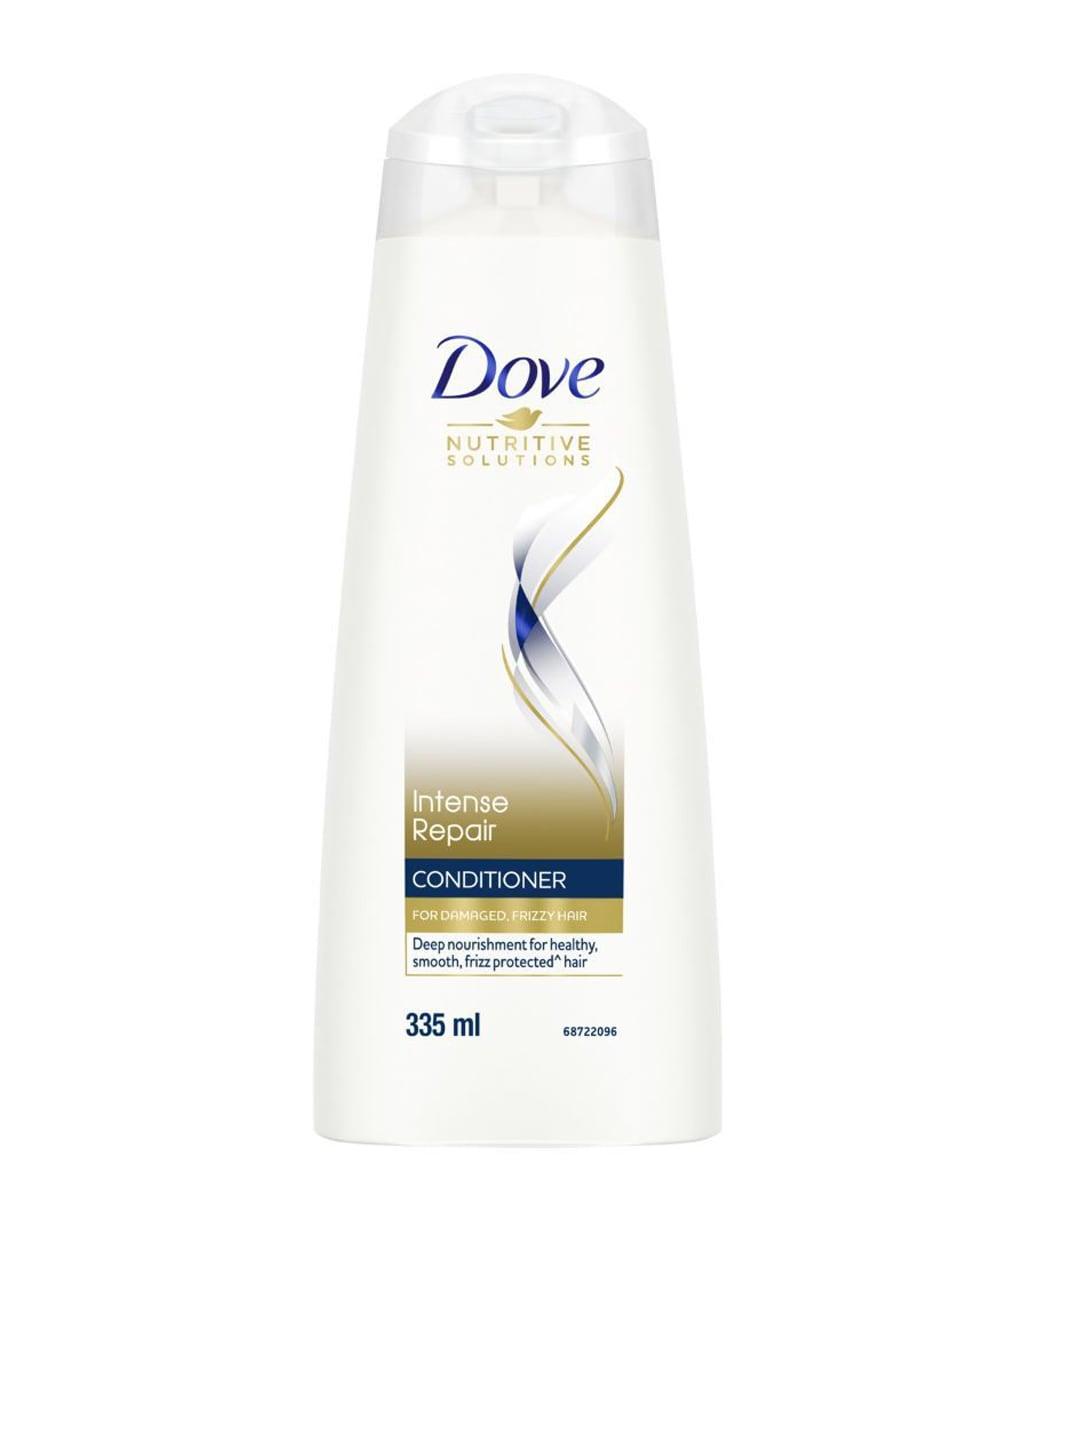 Dove Nutritive Solutions Intense Repair Hair Conditioner 335 ml